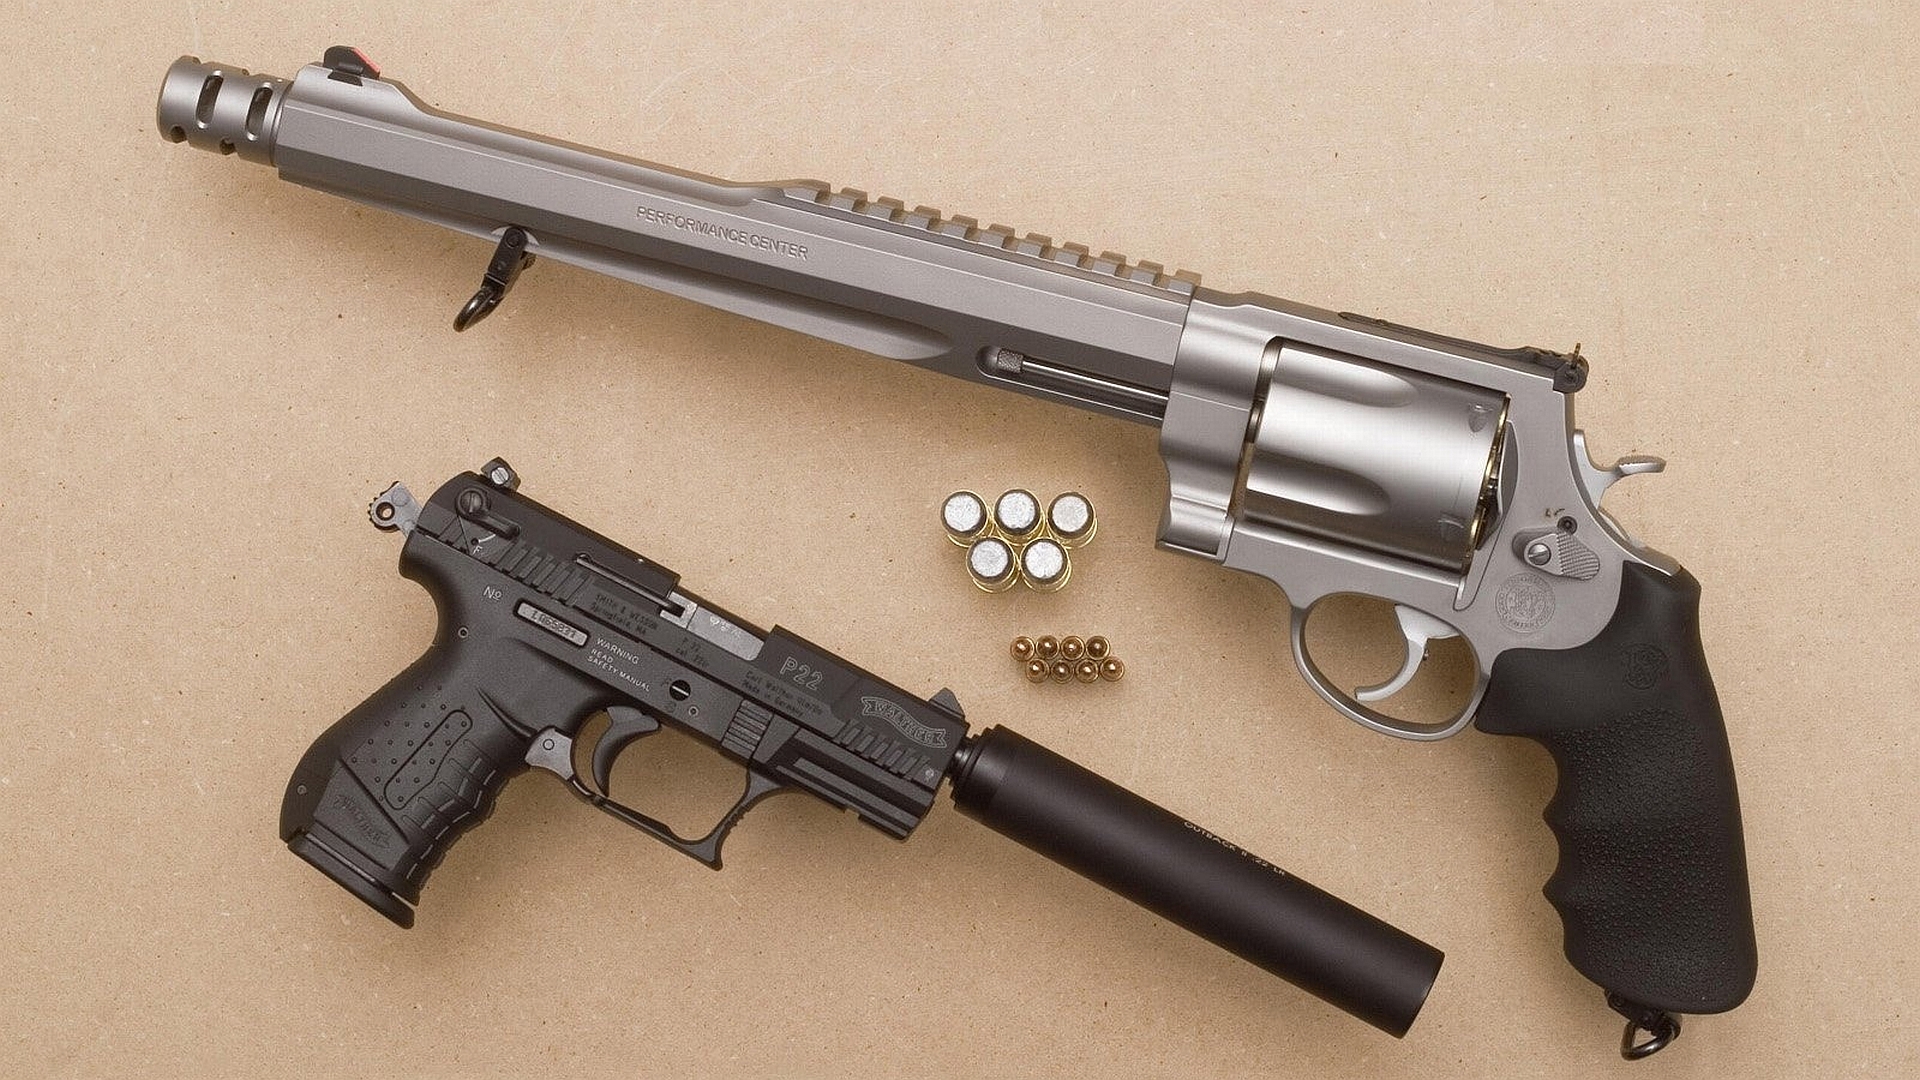 Smith Wesson Magnum Revolver Puter Wallpaper Desktop